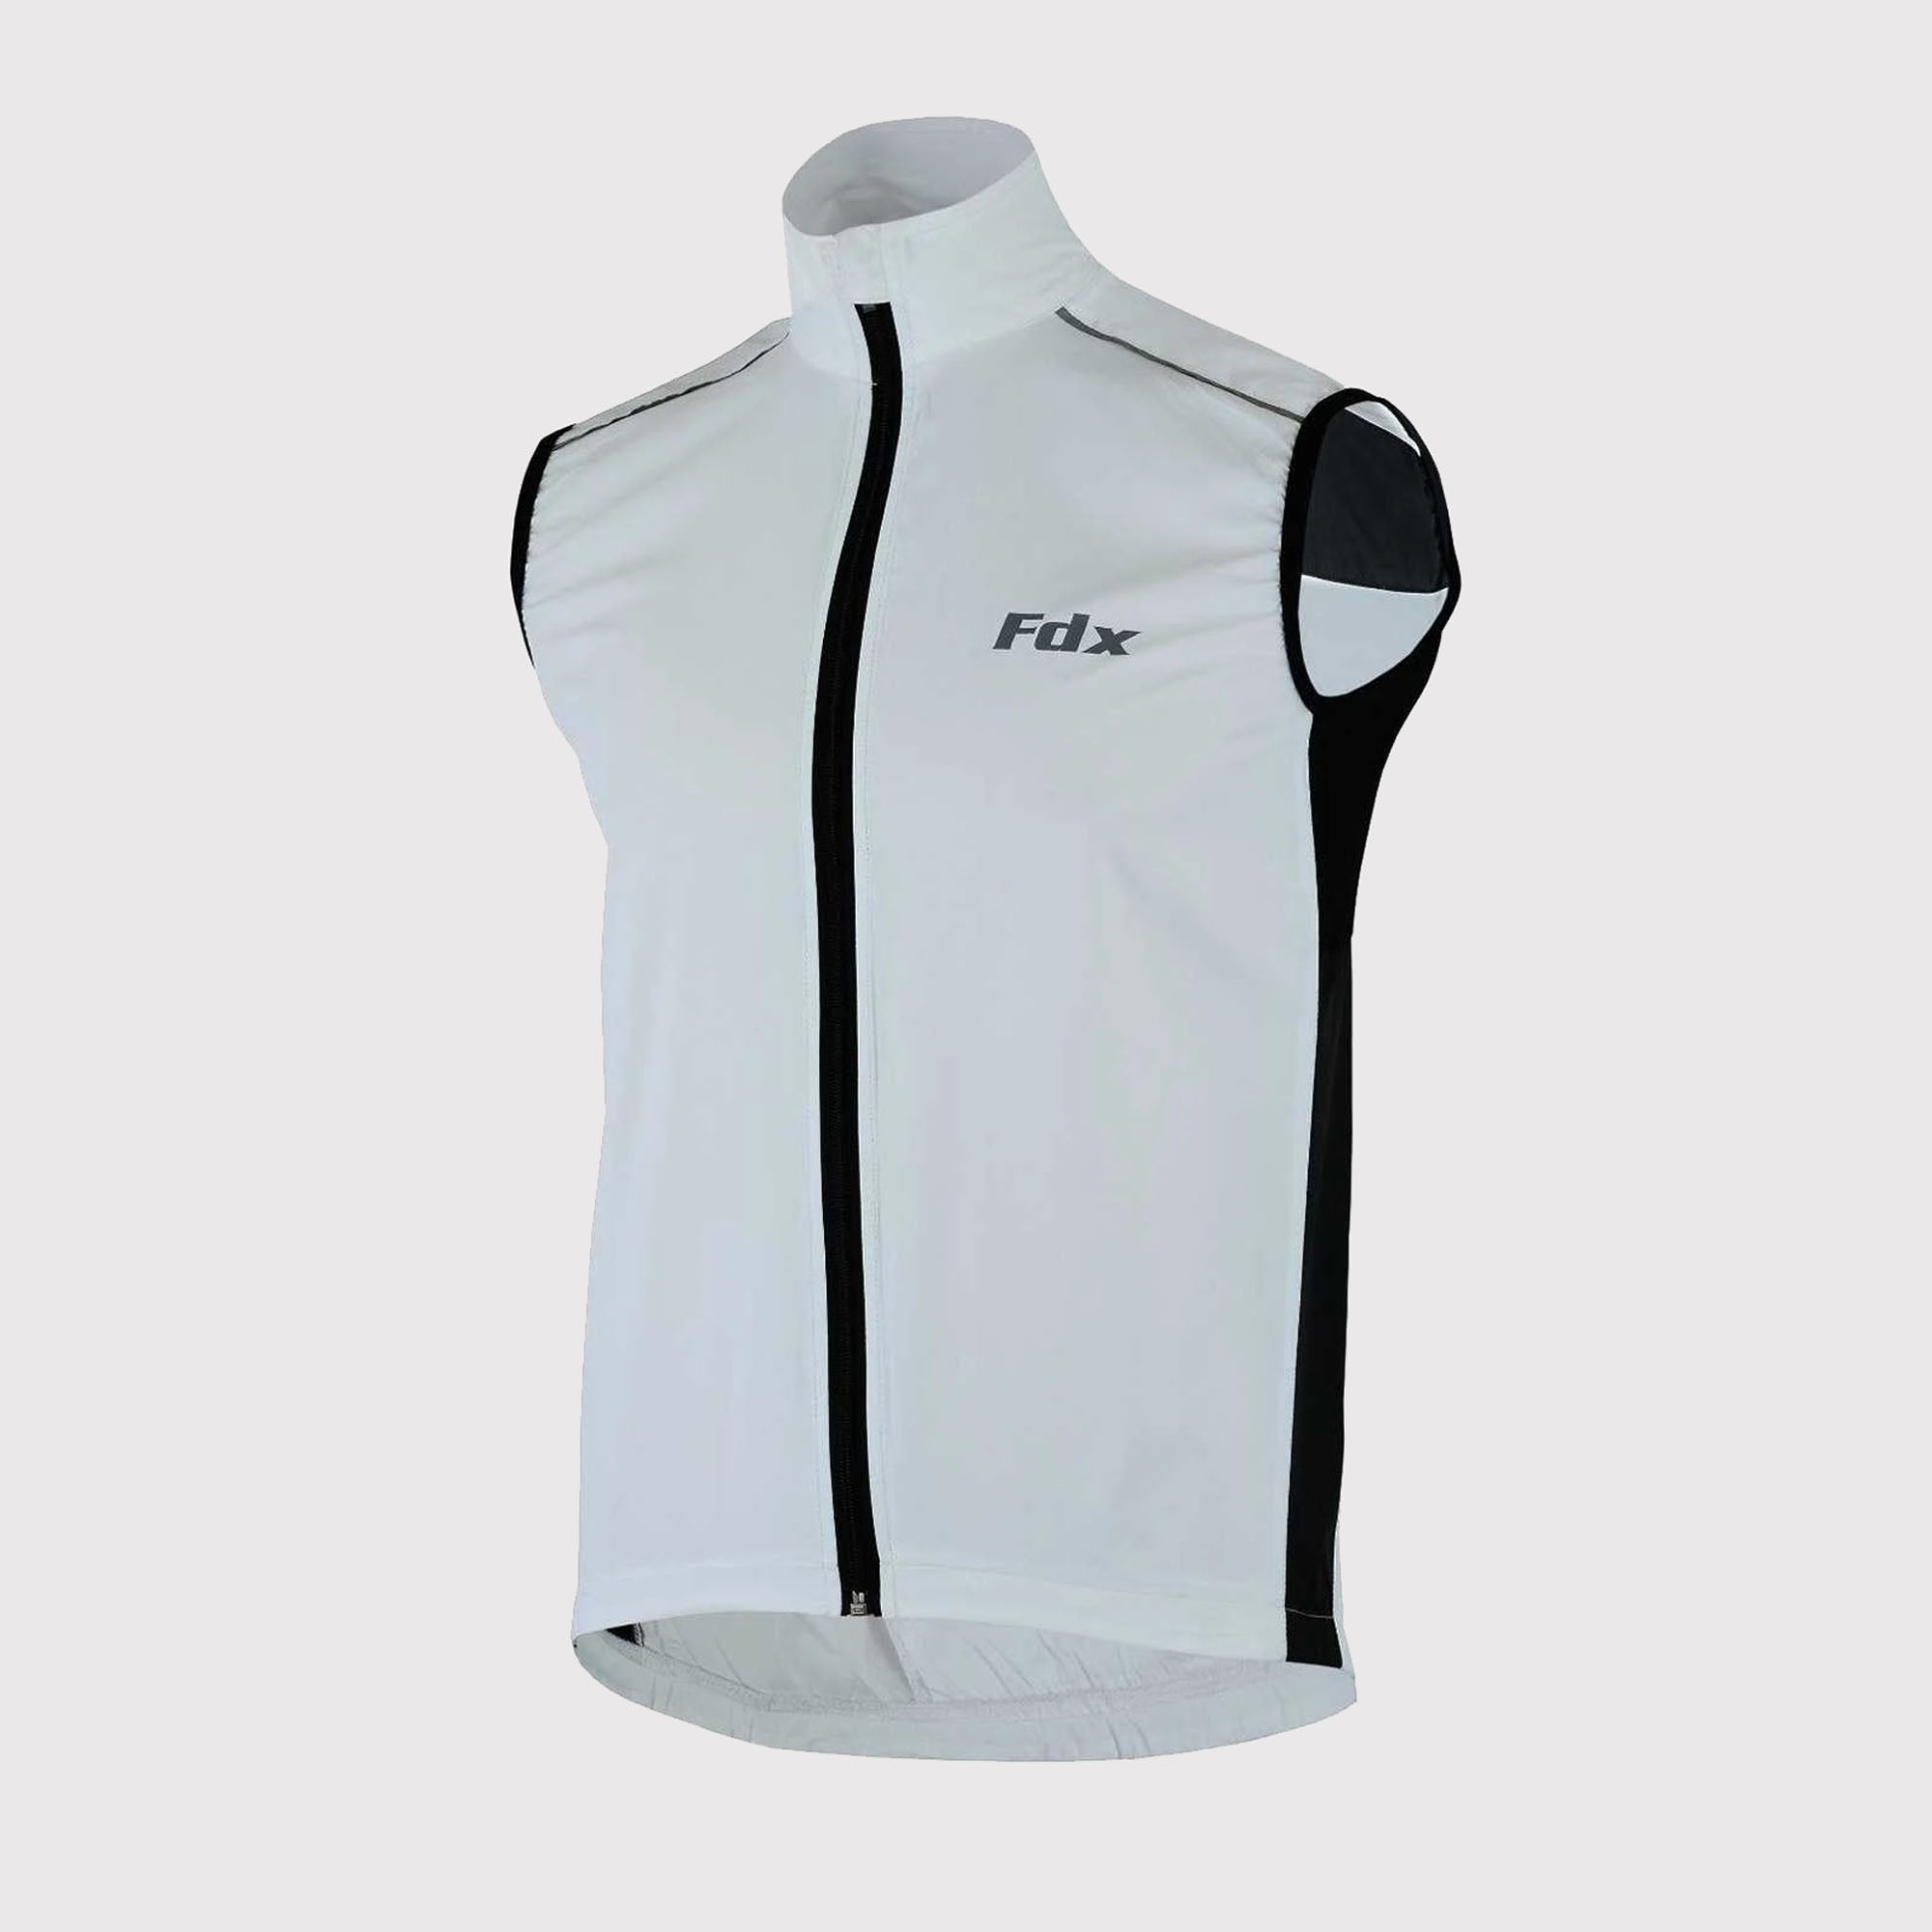 Fdx Men's Black & White Cycling Gilet Sleeveless Vest for Winter Clothing Hi-Viz Refectors, Lightweight, Windproof, Waterproof & Pockets - Dart